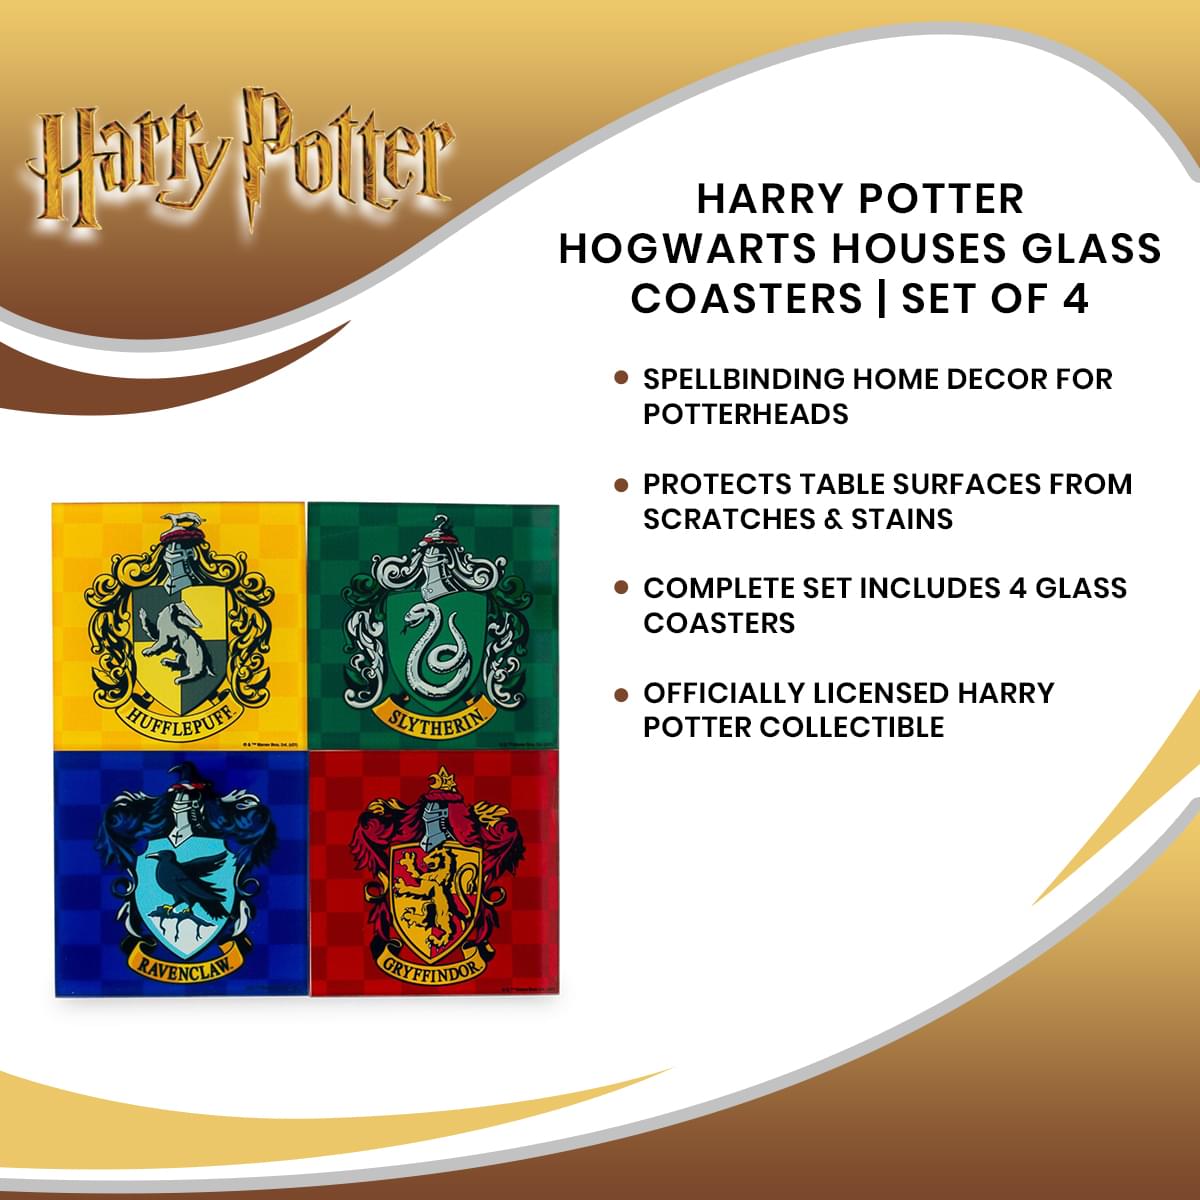 Harry Potter Hogwarts Houses Glass Coasters | Set of 4